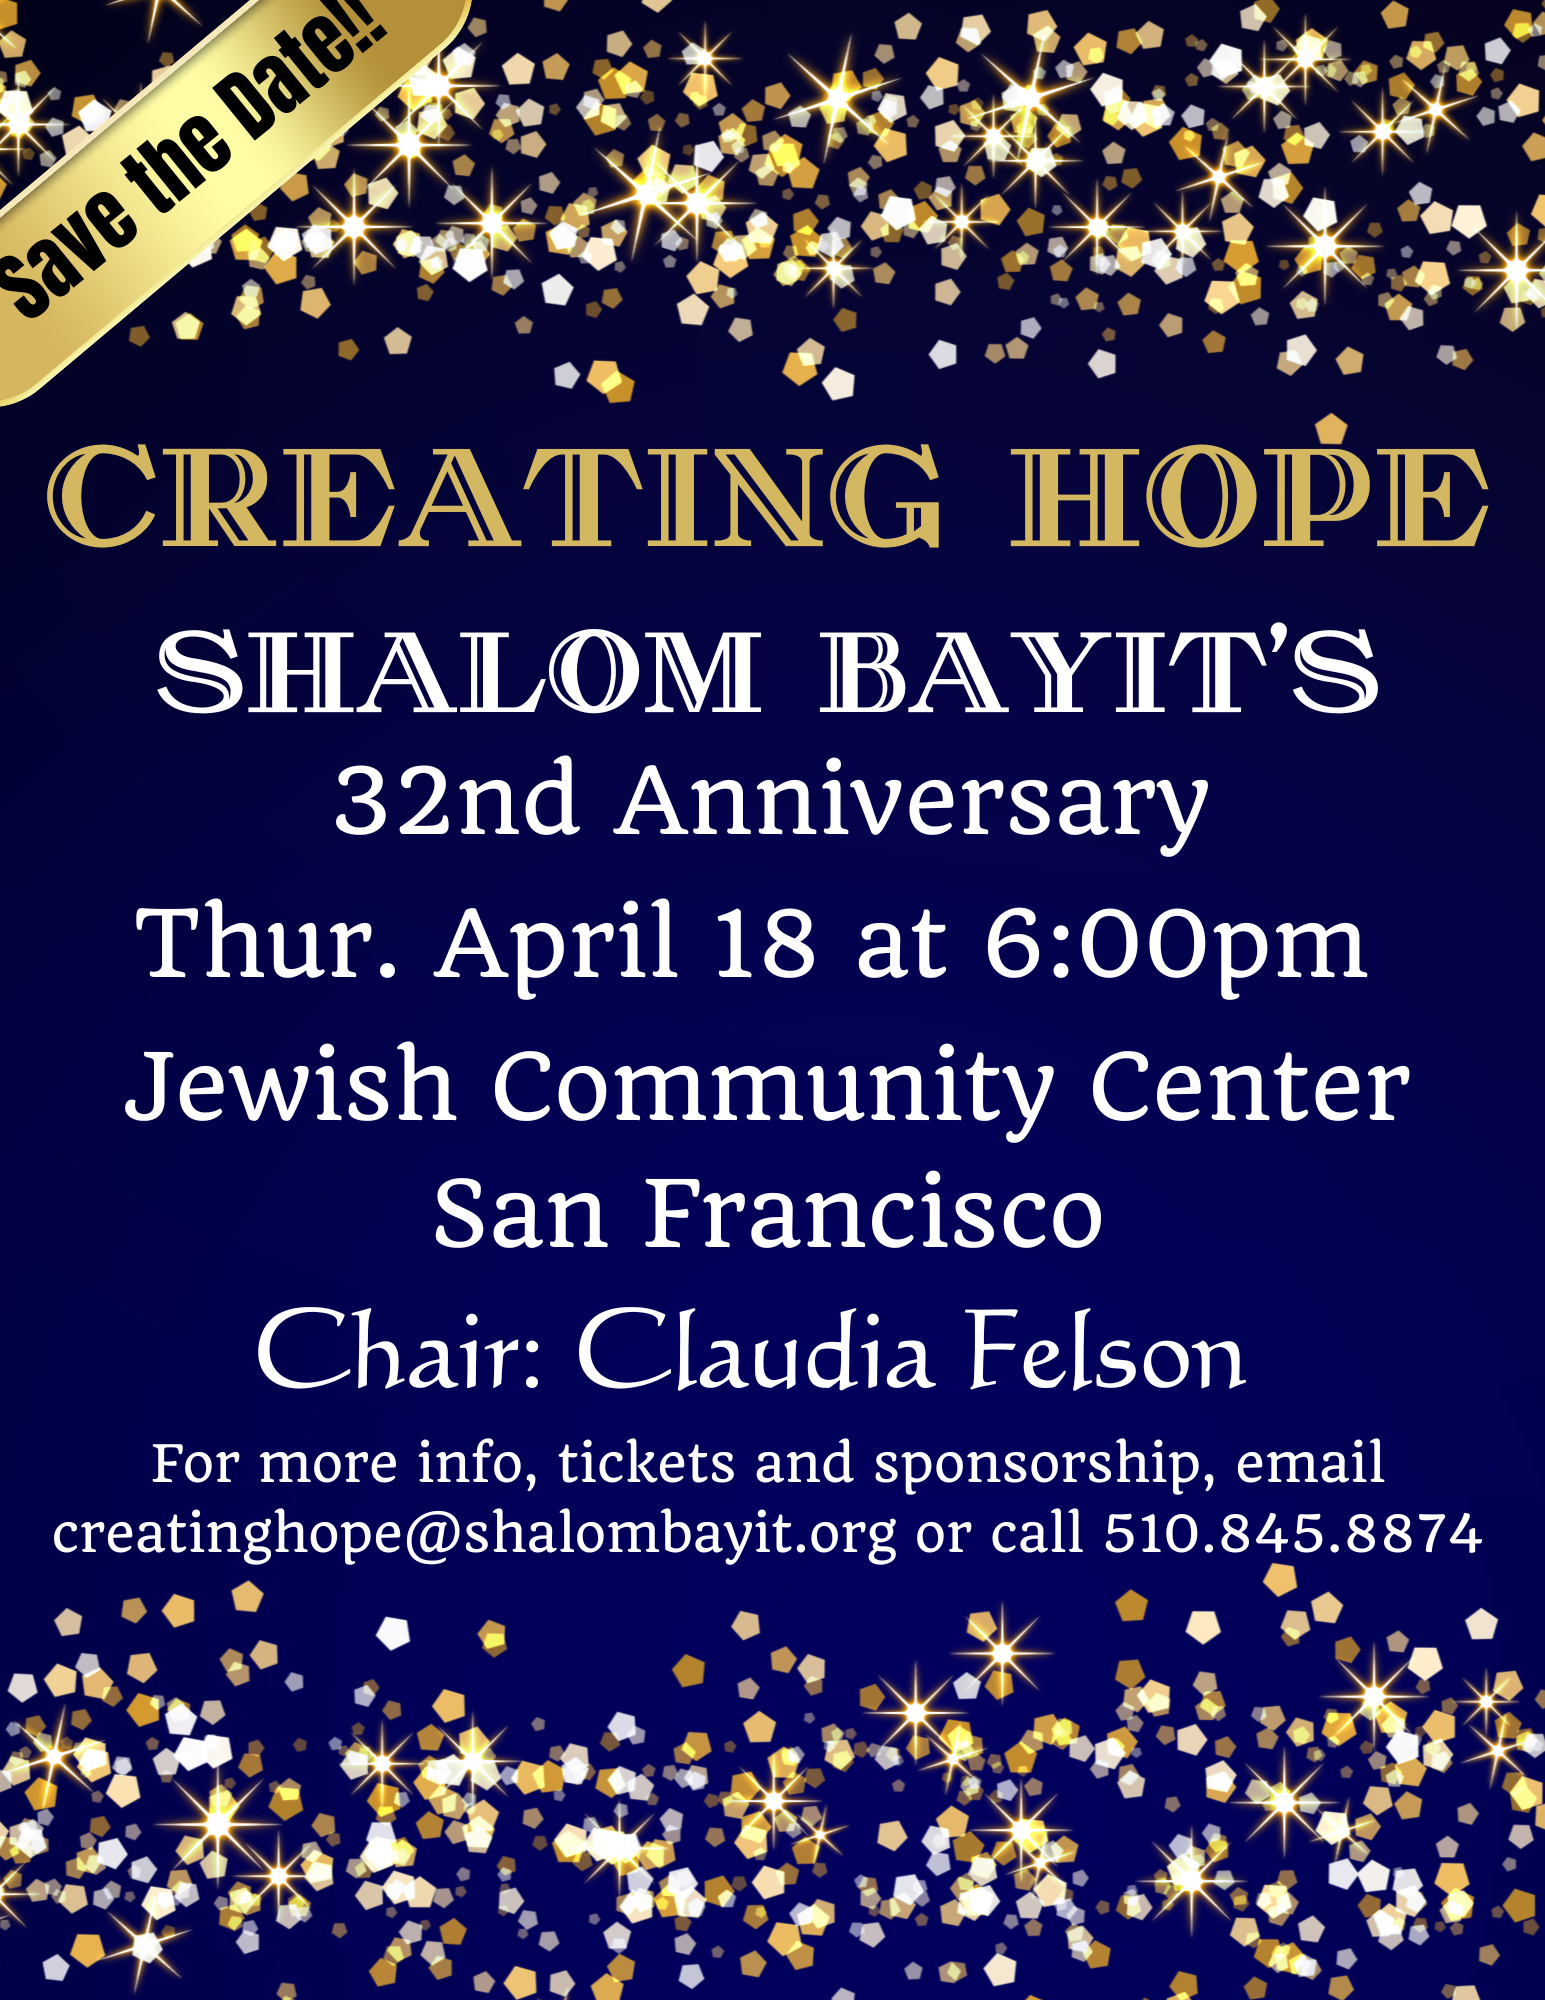 Shalom Bayit - Creating Hope#2